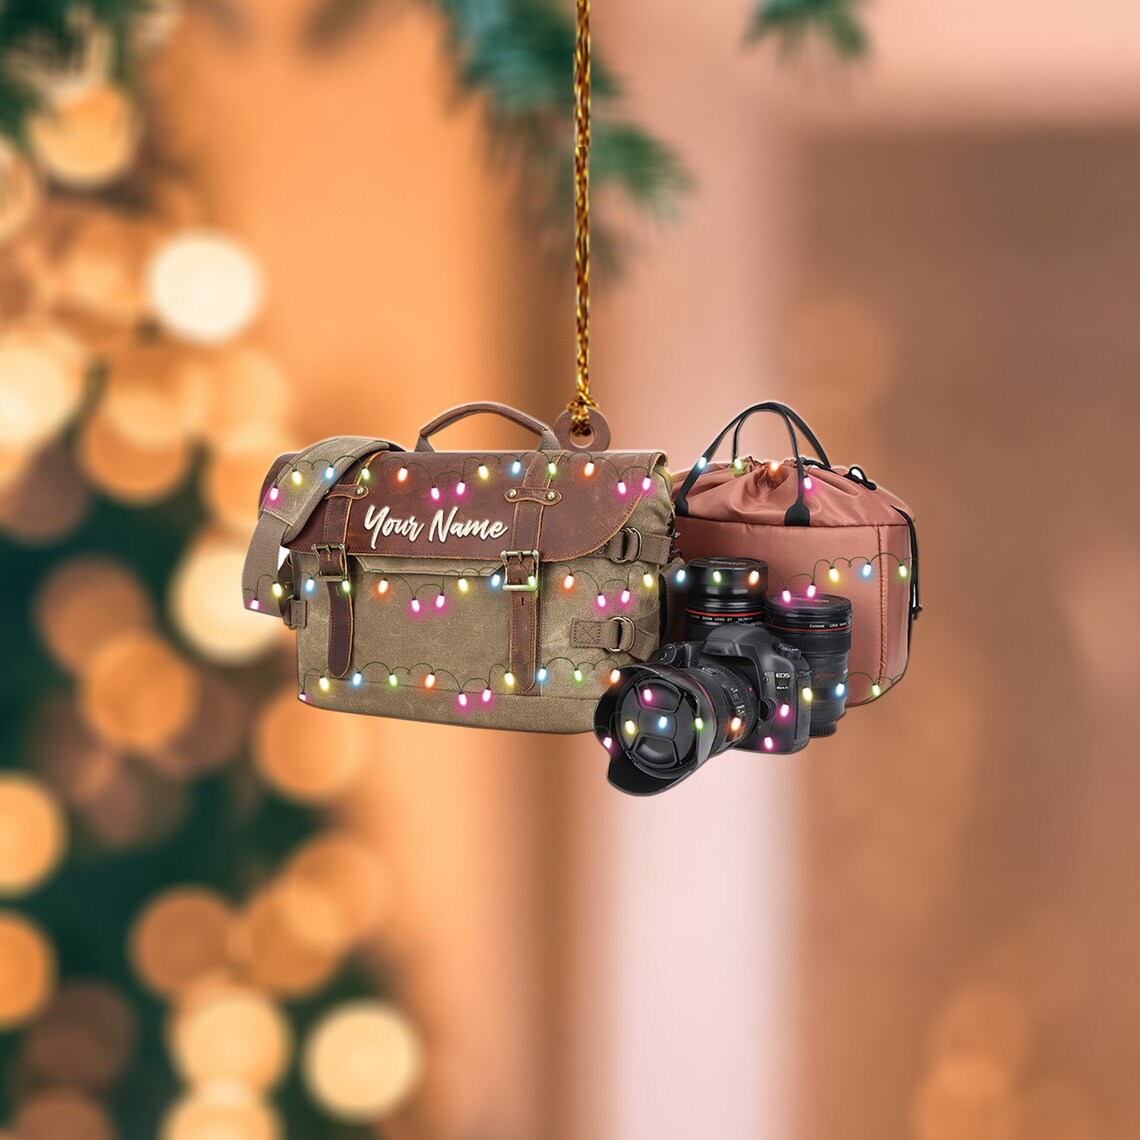 Personalized Camera Bag Christmas Ornament/ Gift For photographer / love Camera tree hanging Ornament Decor/ Camera Xmas decor